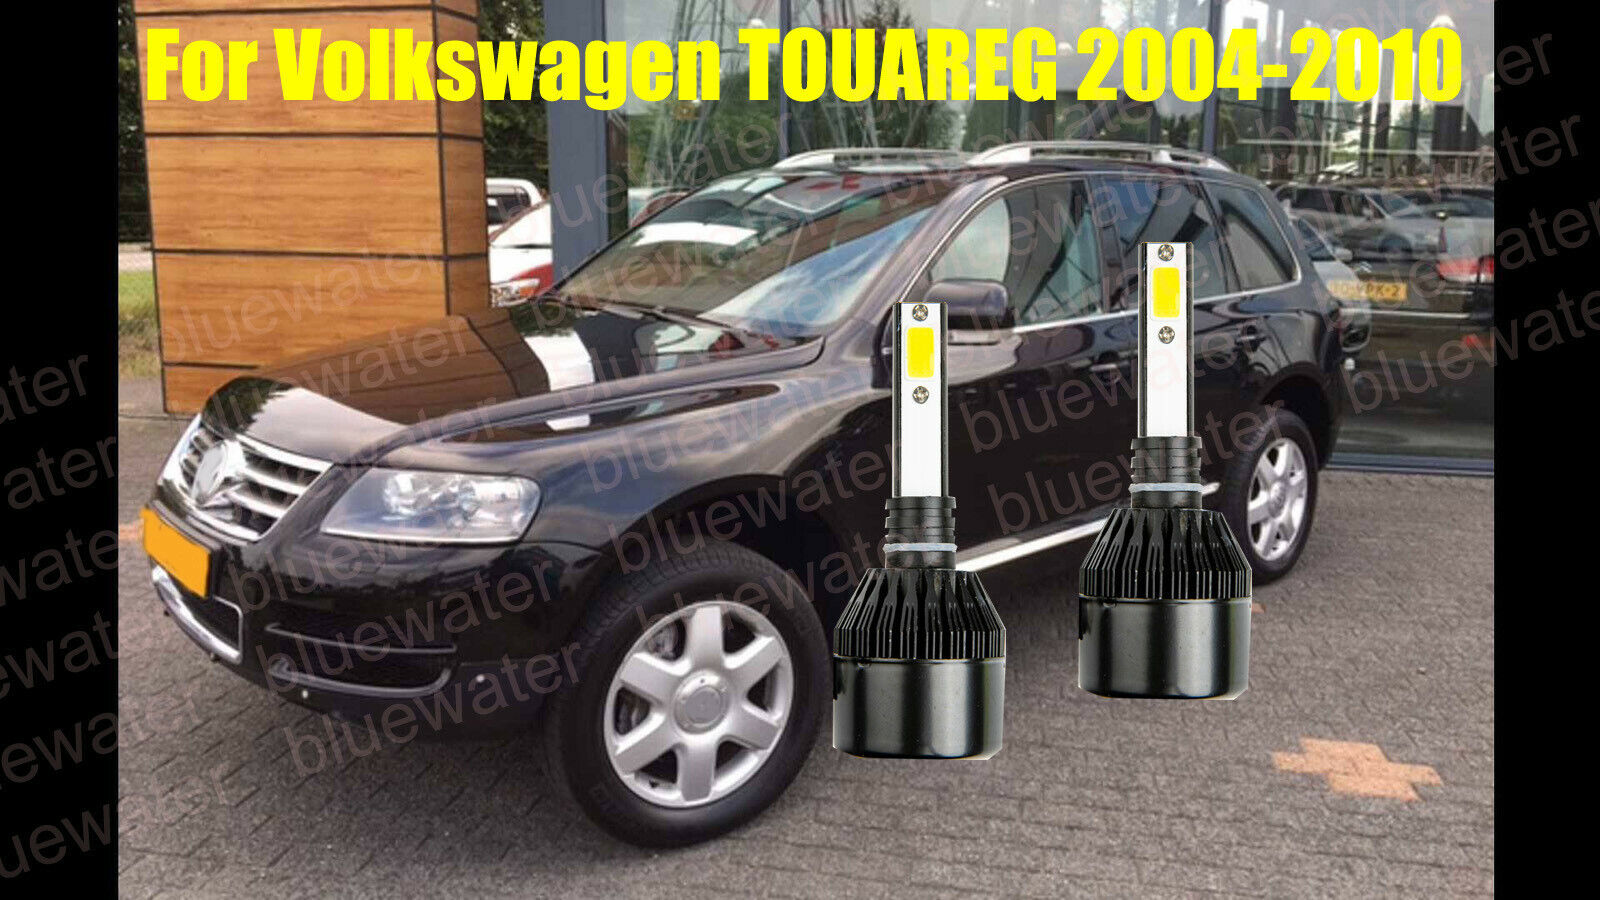 LED For VW TOUAREG 2004-2010 Headlight Kit H7 6000K White CREE Bulbs Low Beam